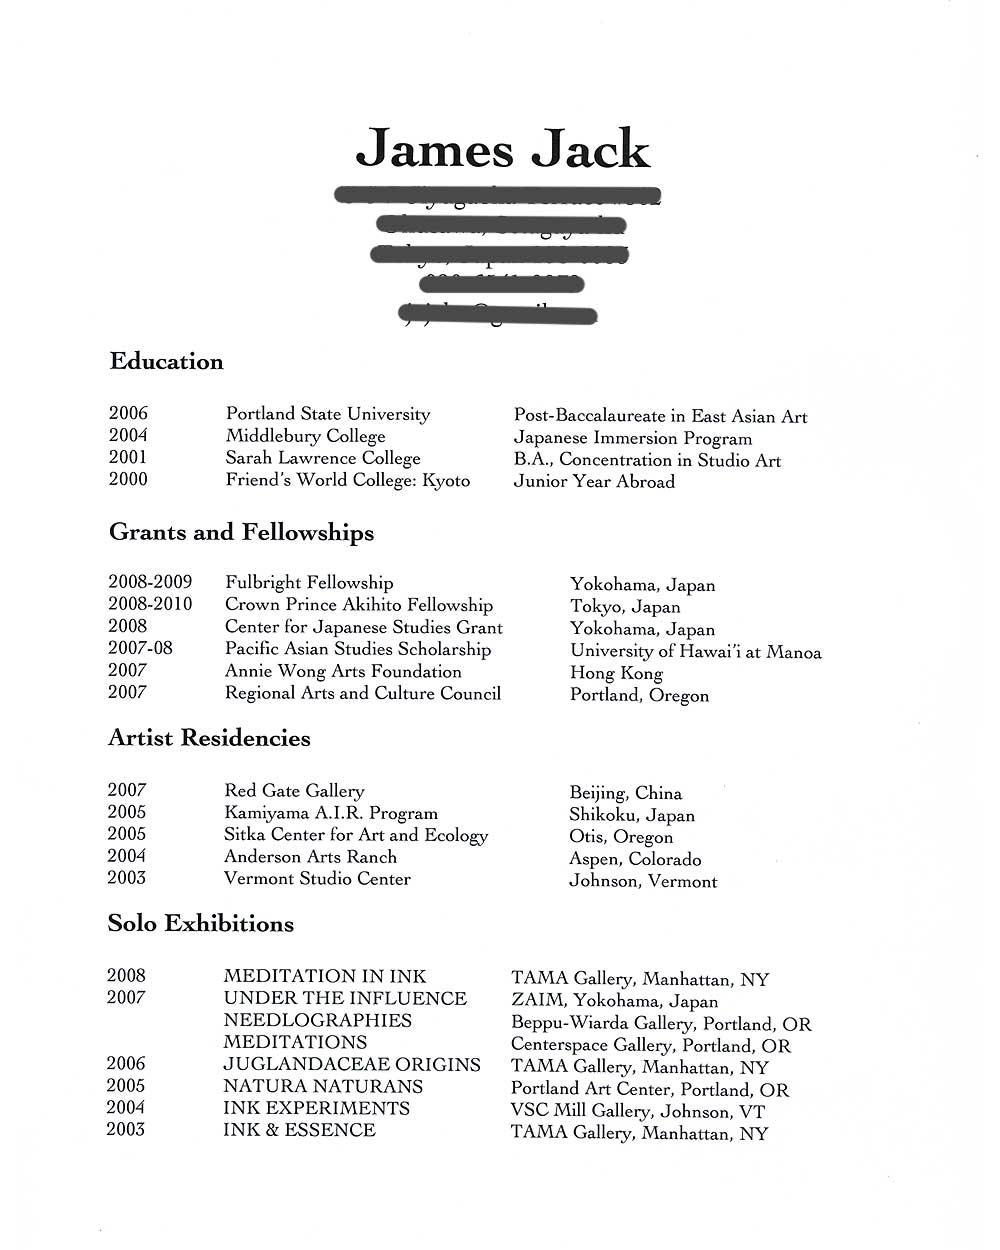 James Jack's Resume, pg 1